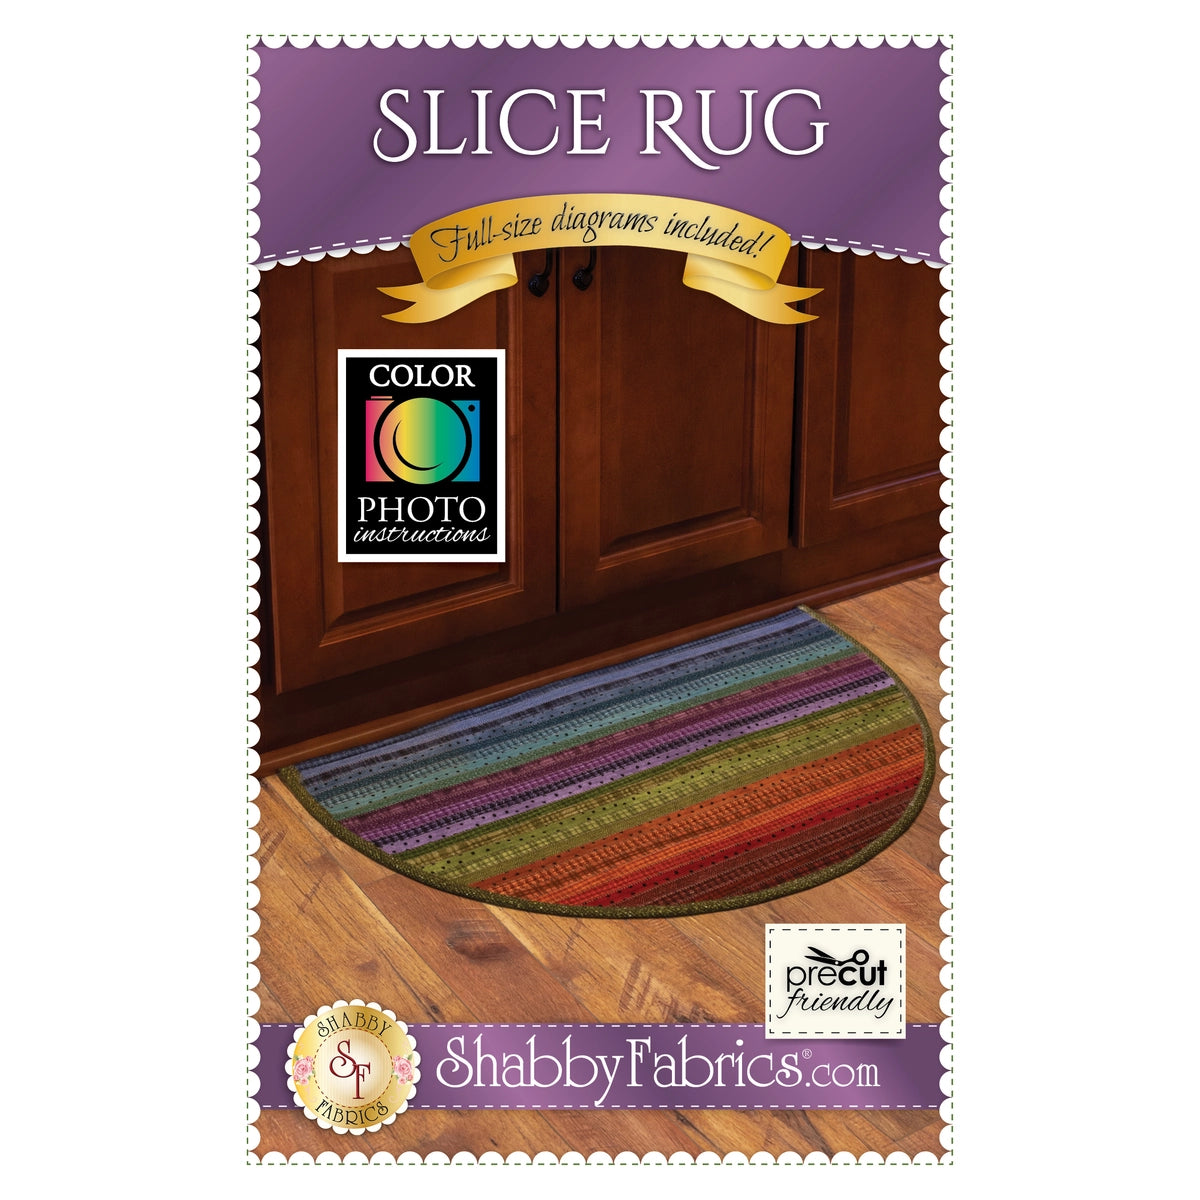 Slice Rug Pattern by Shabby Fabrics